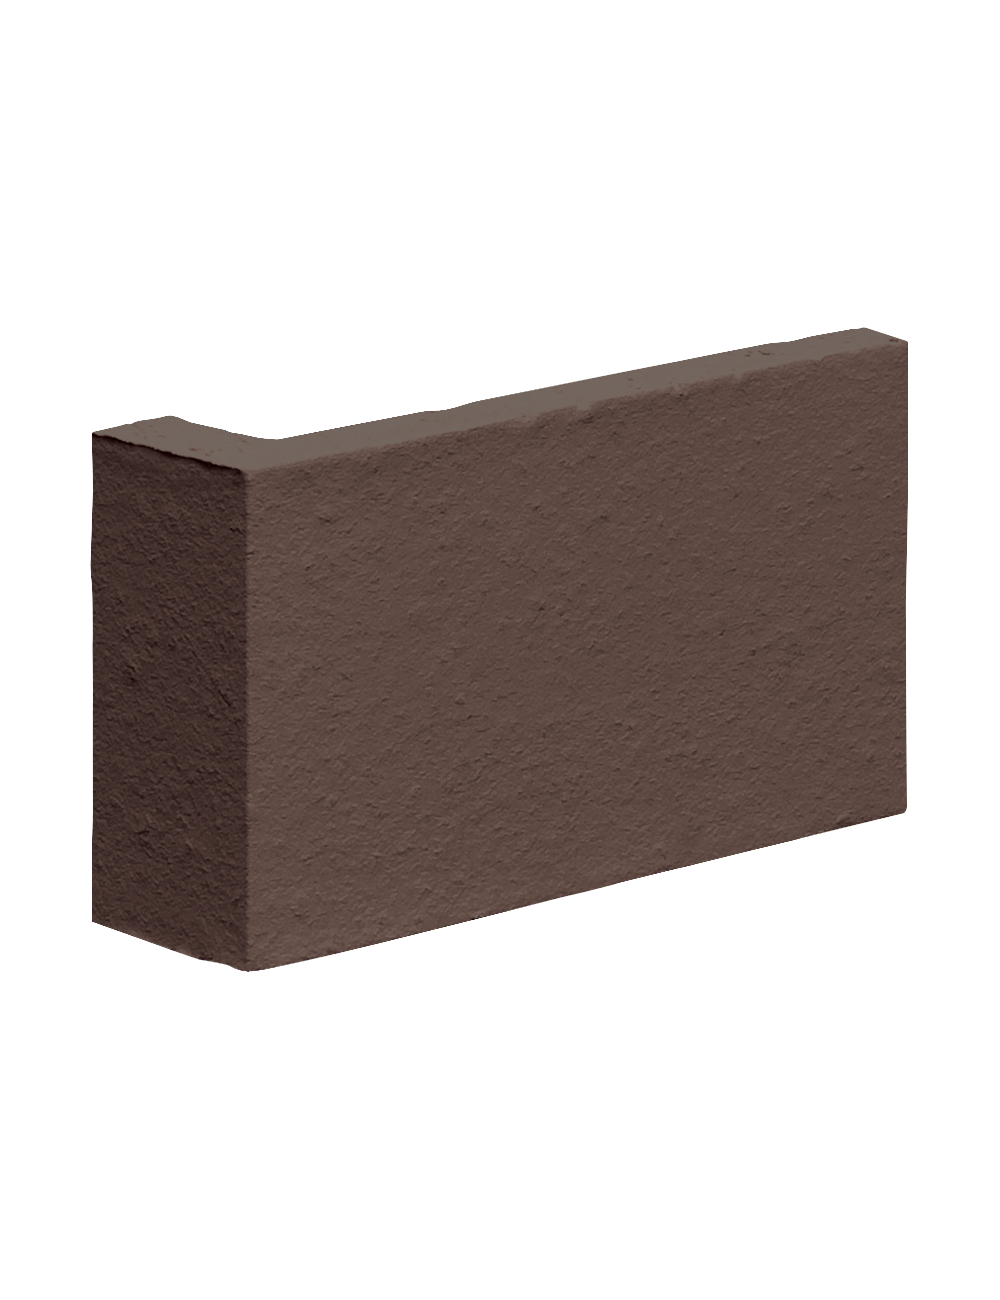 Colțar ceramic Klinker - Maro (Natural brown) (03) 120/35X65X10